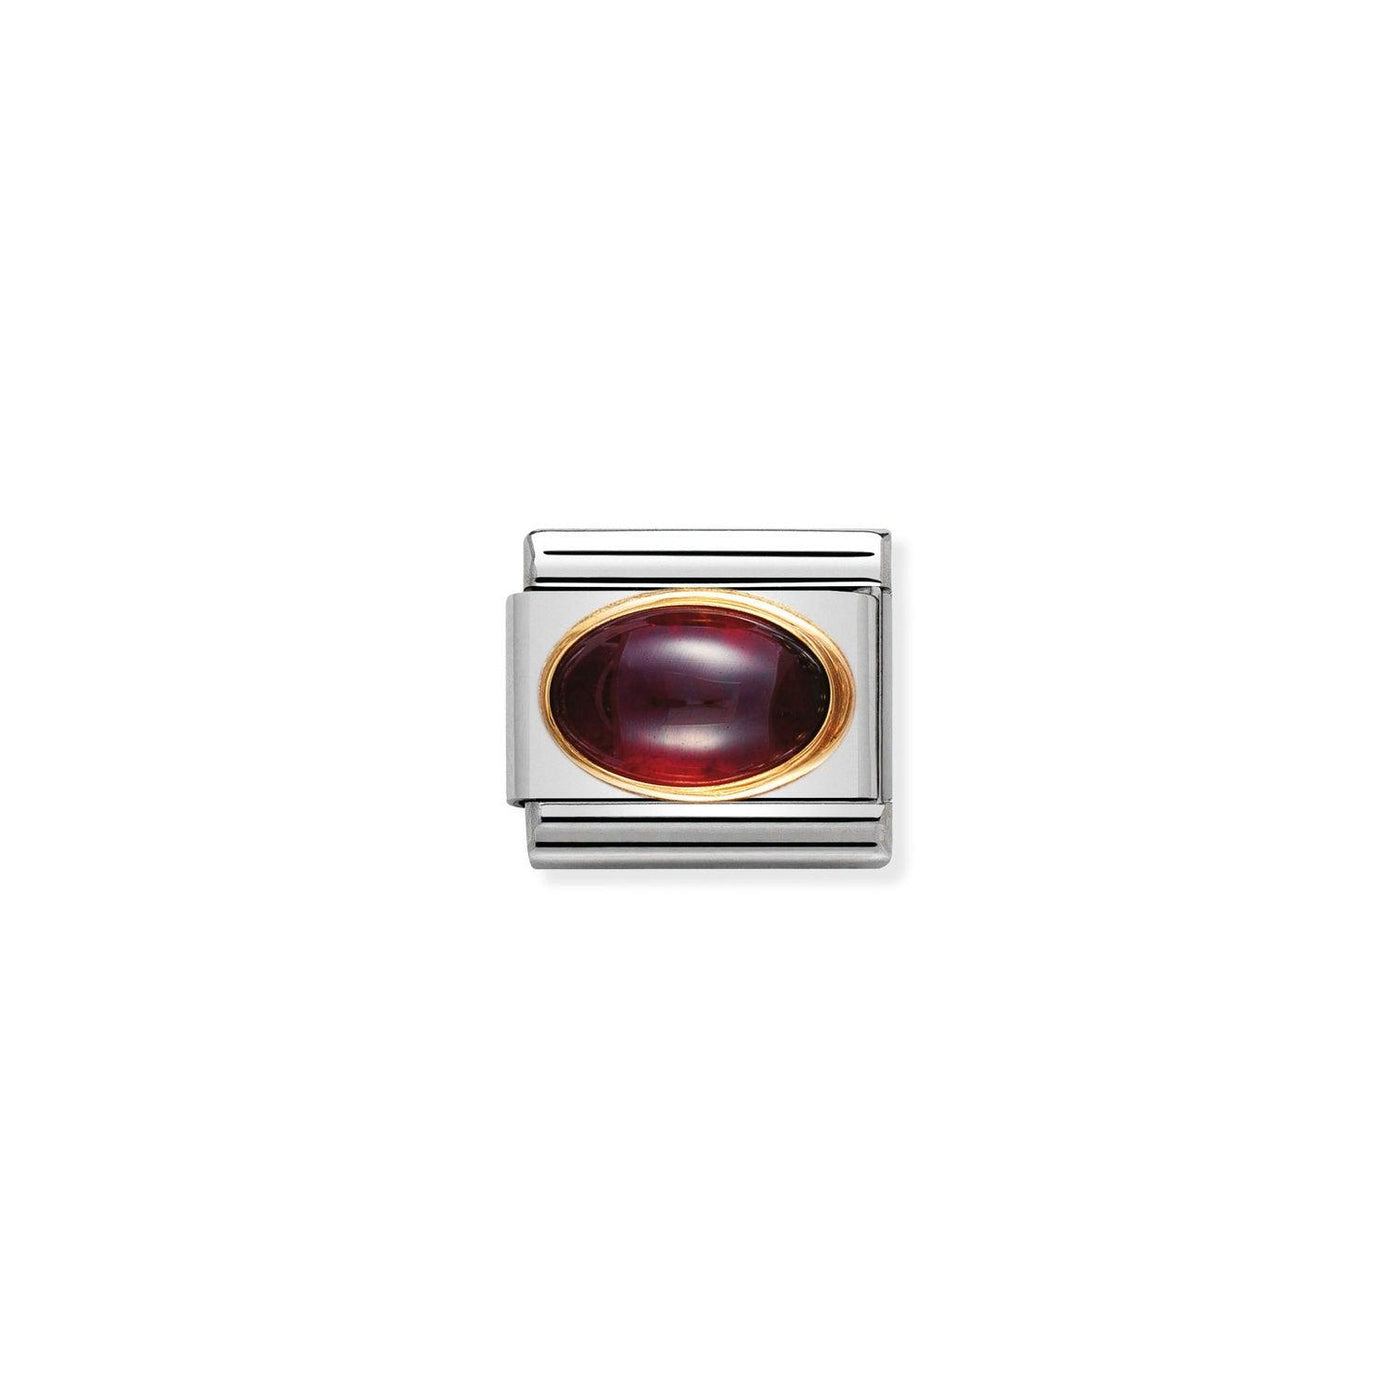 Nomination Classic Garnet 18ct Gold Charm - Rococo Jewellery